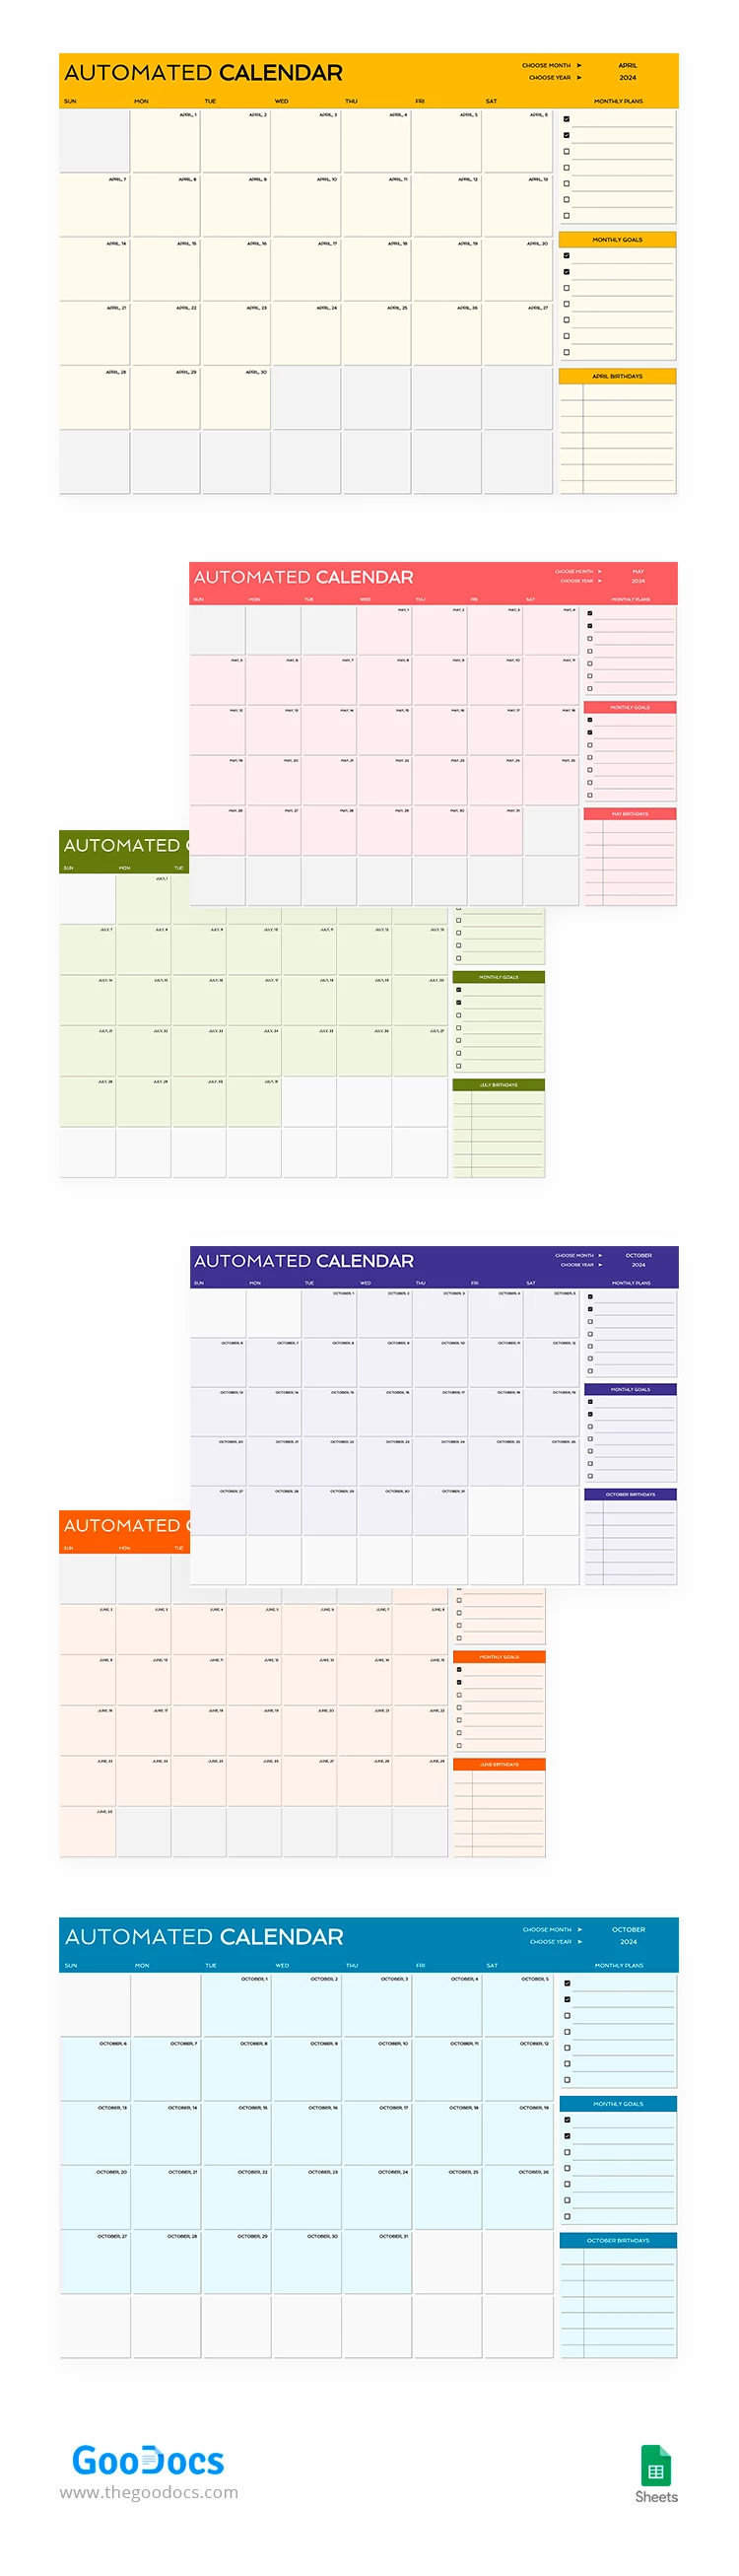 Calendario Mensual Automatizado - free Google Docs Template - 10068628